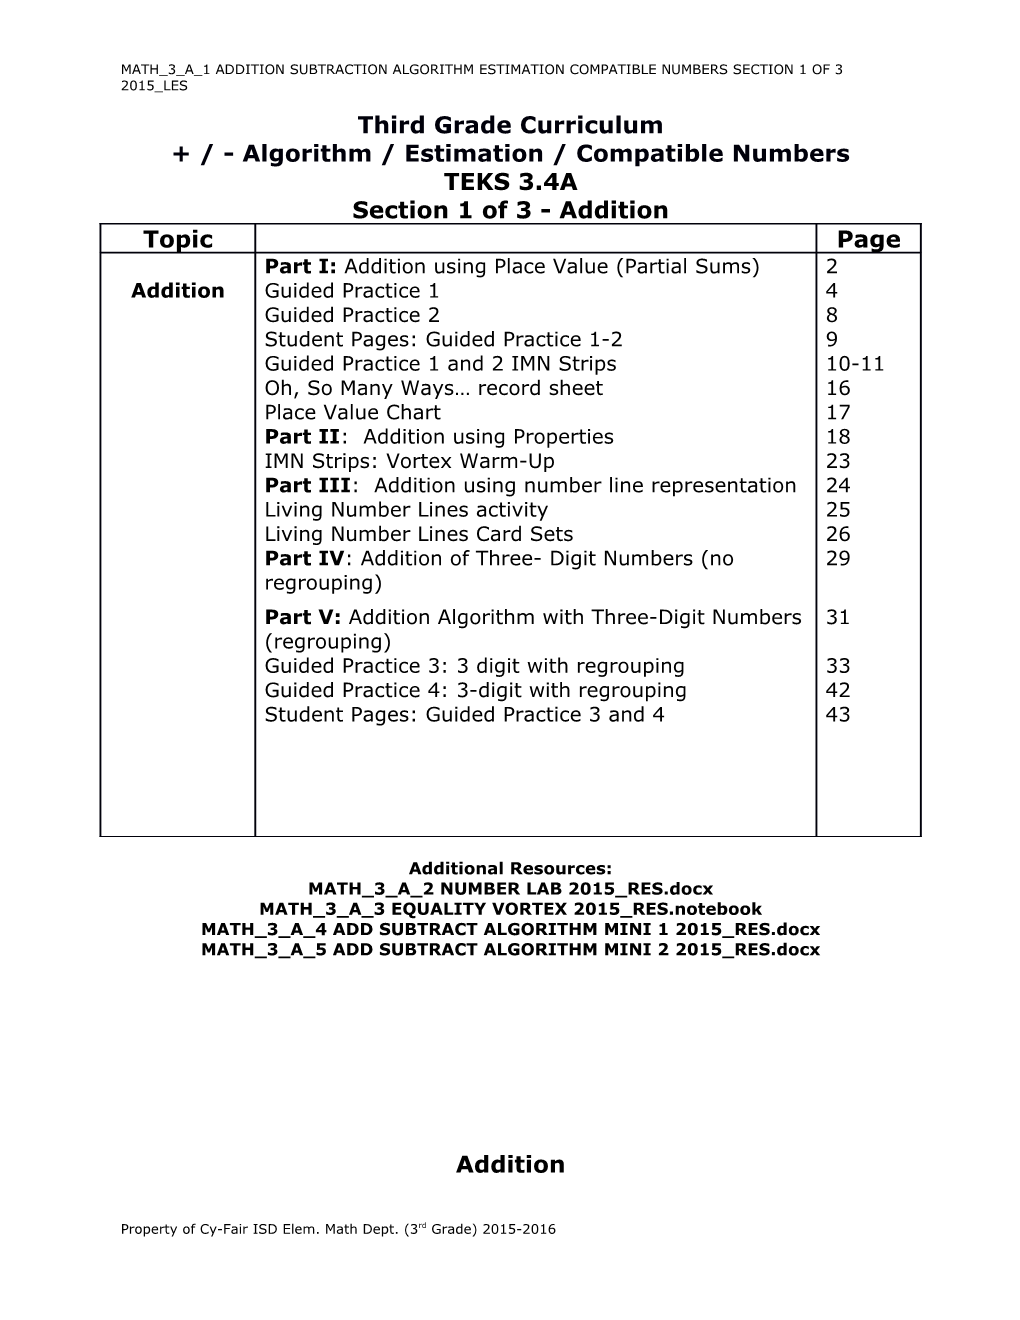 Math 3 a 1 Addition Subtraction Algorithm Estimation Compatible Numbers Section 1 of 3 2015 Les